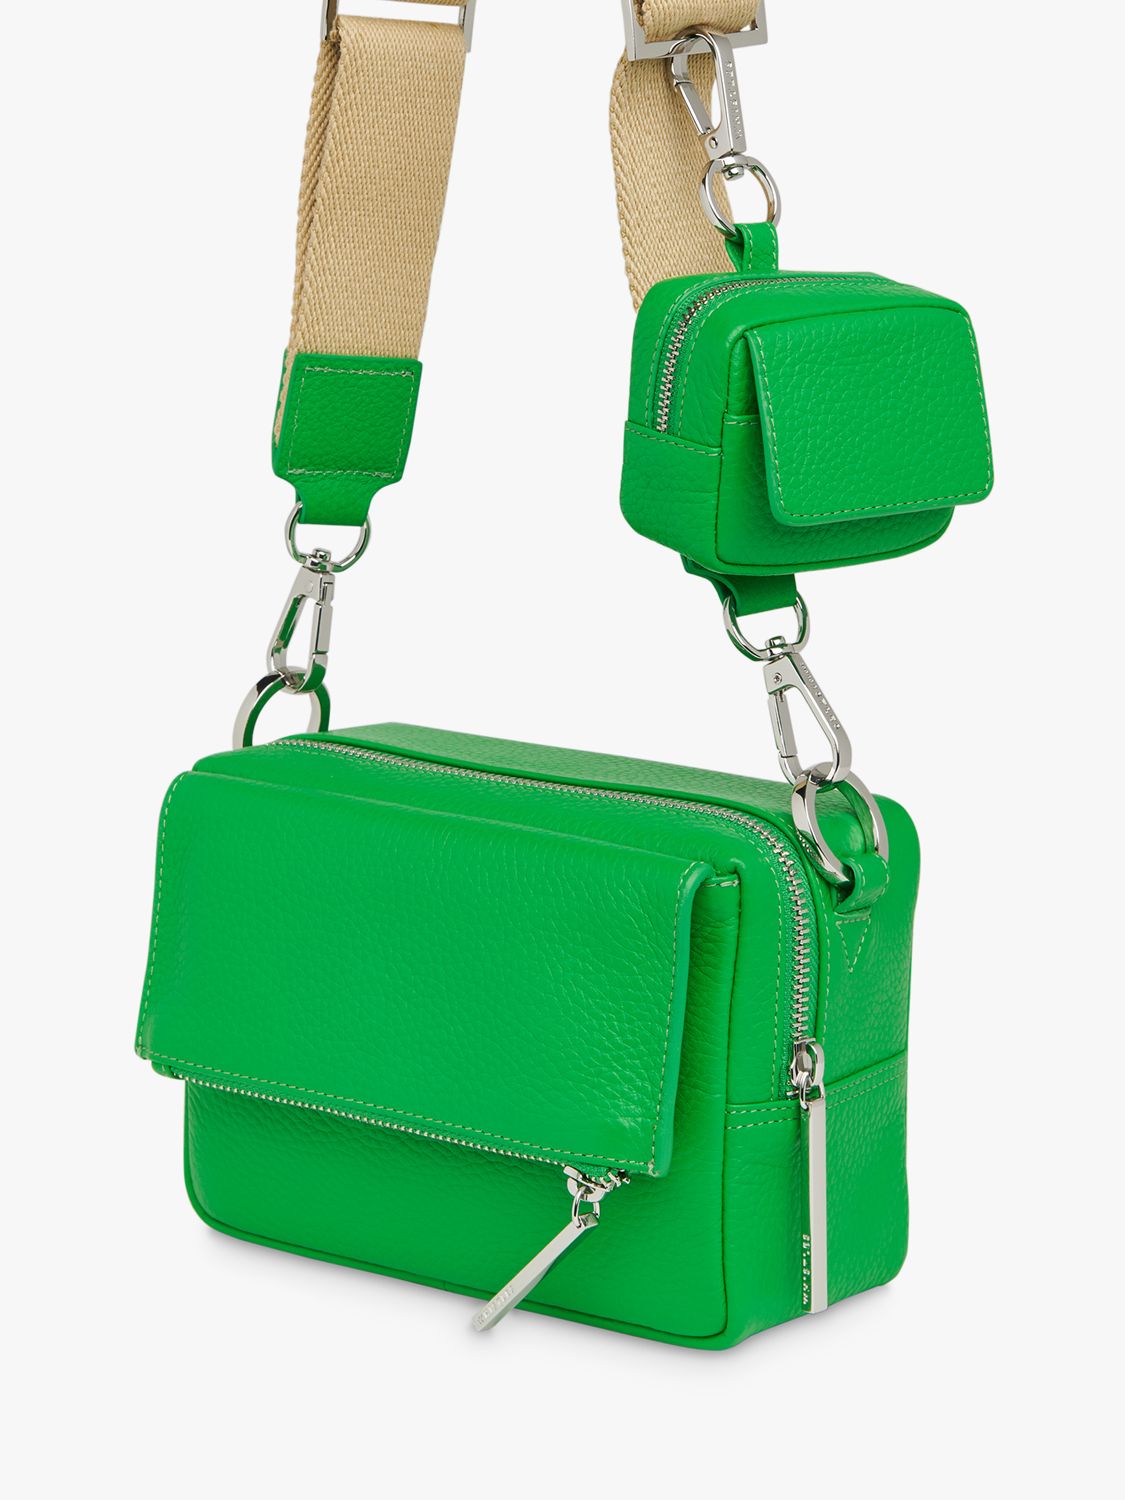 Whistles Bibi Mini Keyring Bag, Green/Multi, One Size